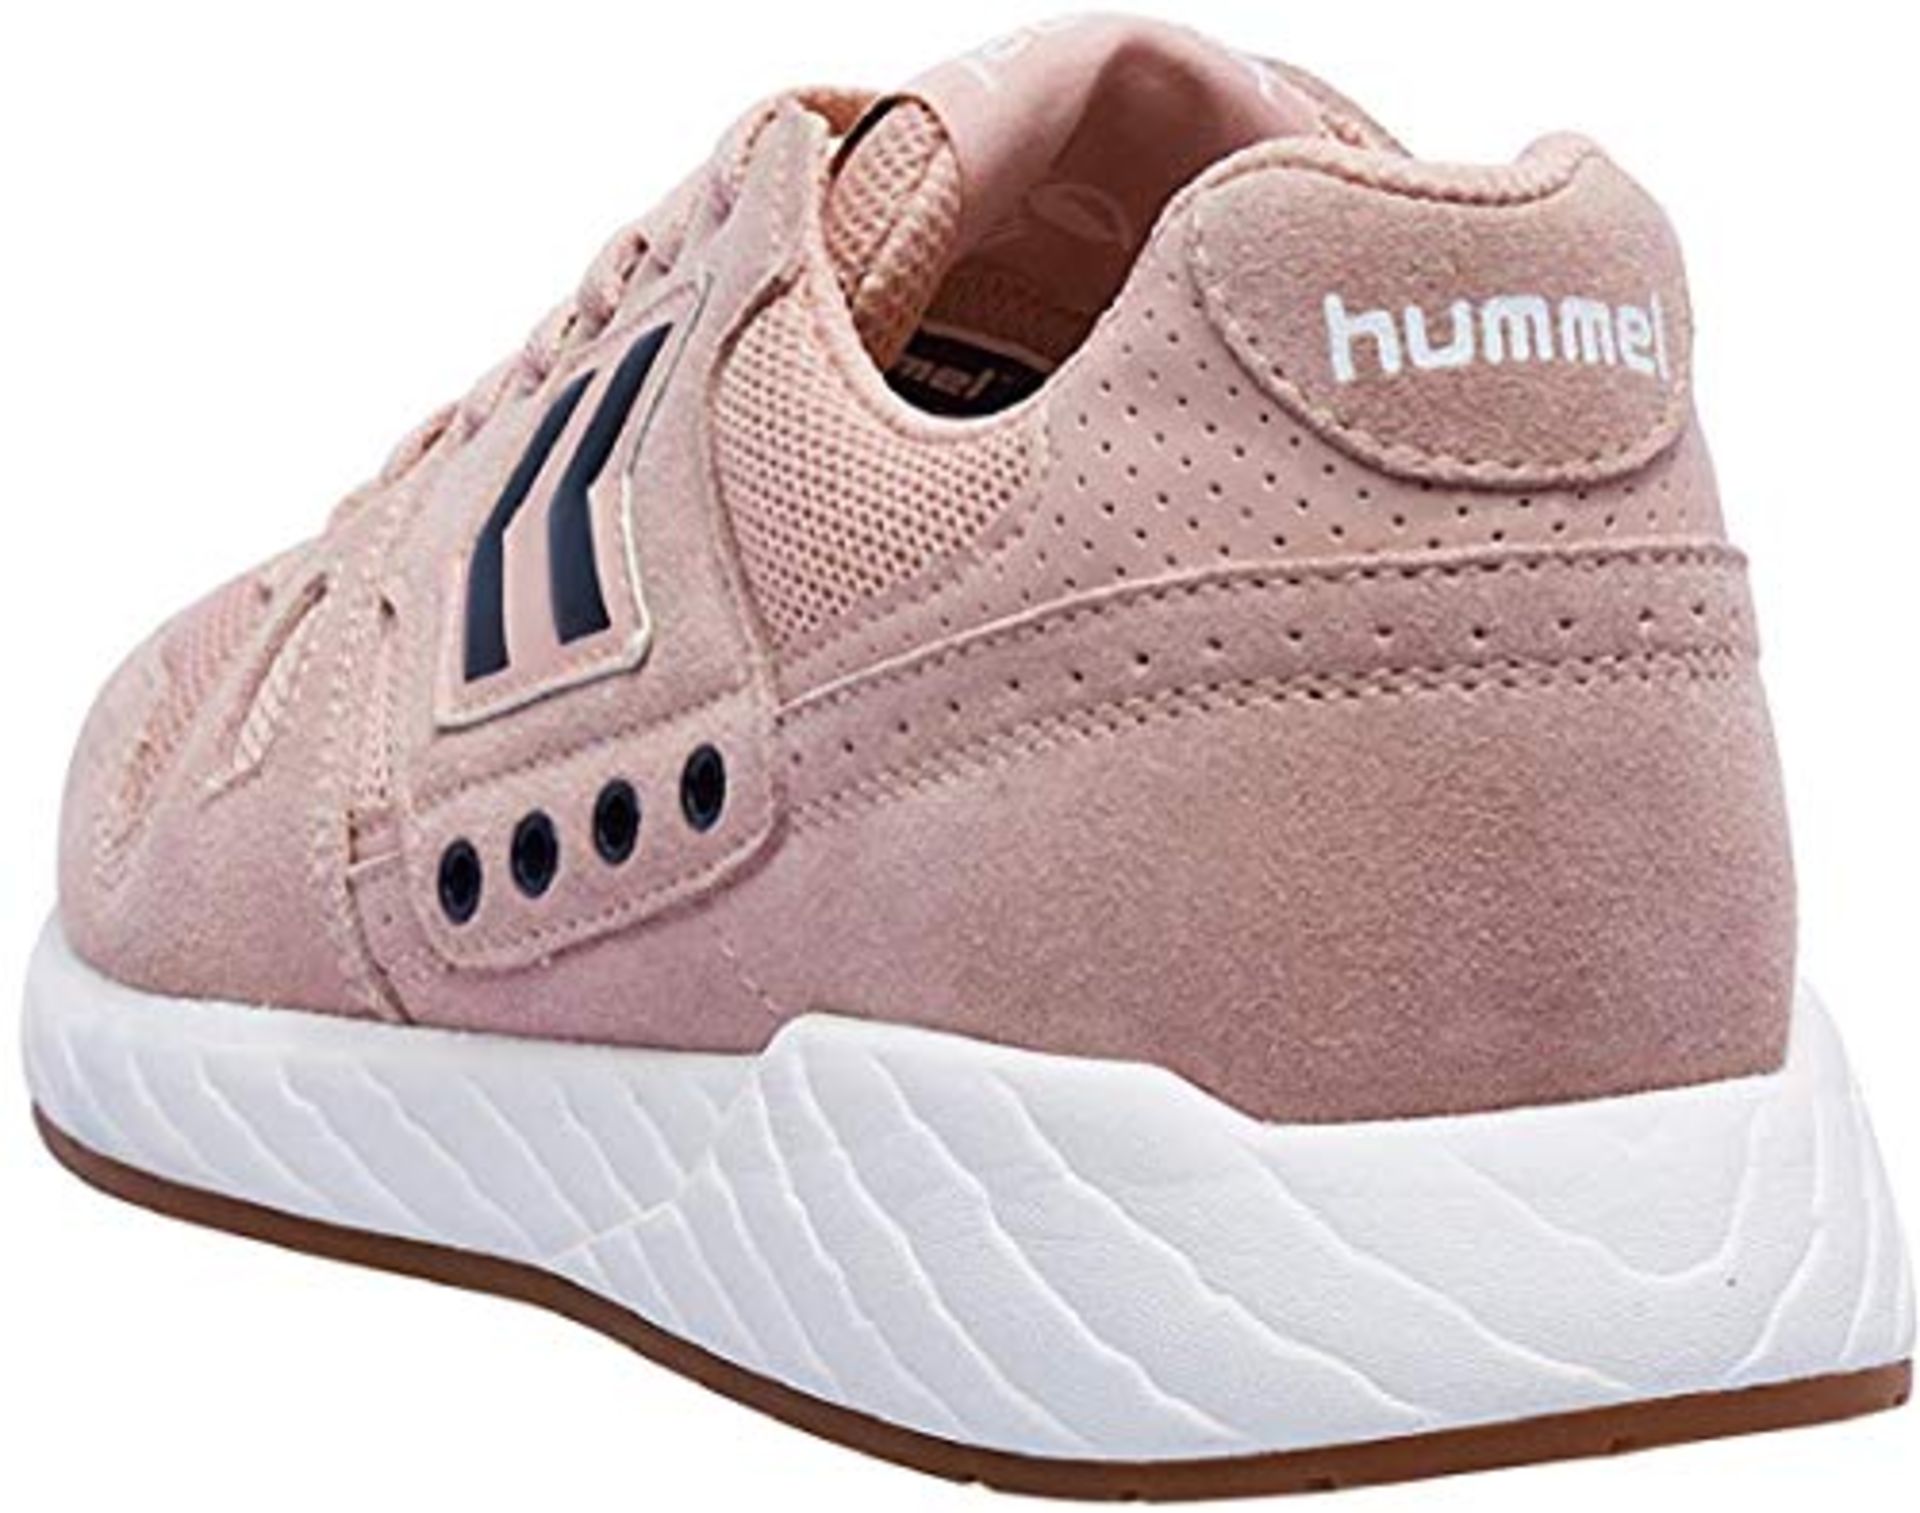 1 x Hummel Marathona Legend Men's Sneakers, rosa/anthrazit, 42 EU - 9 US 201883_3113 Size: 42 EU - - Image 3 of 6